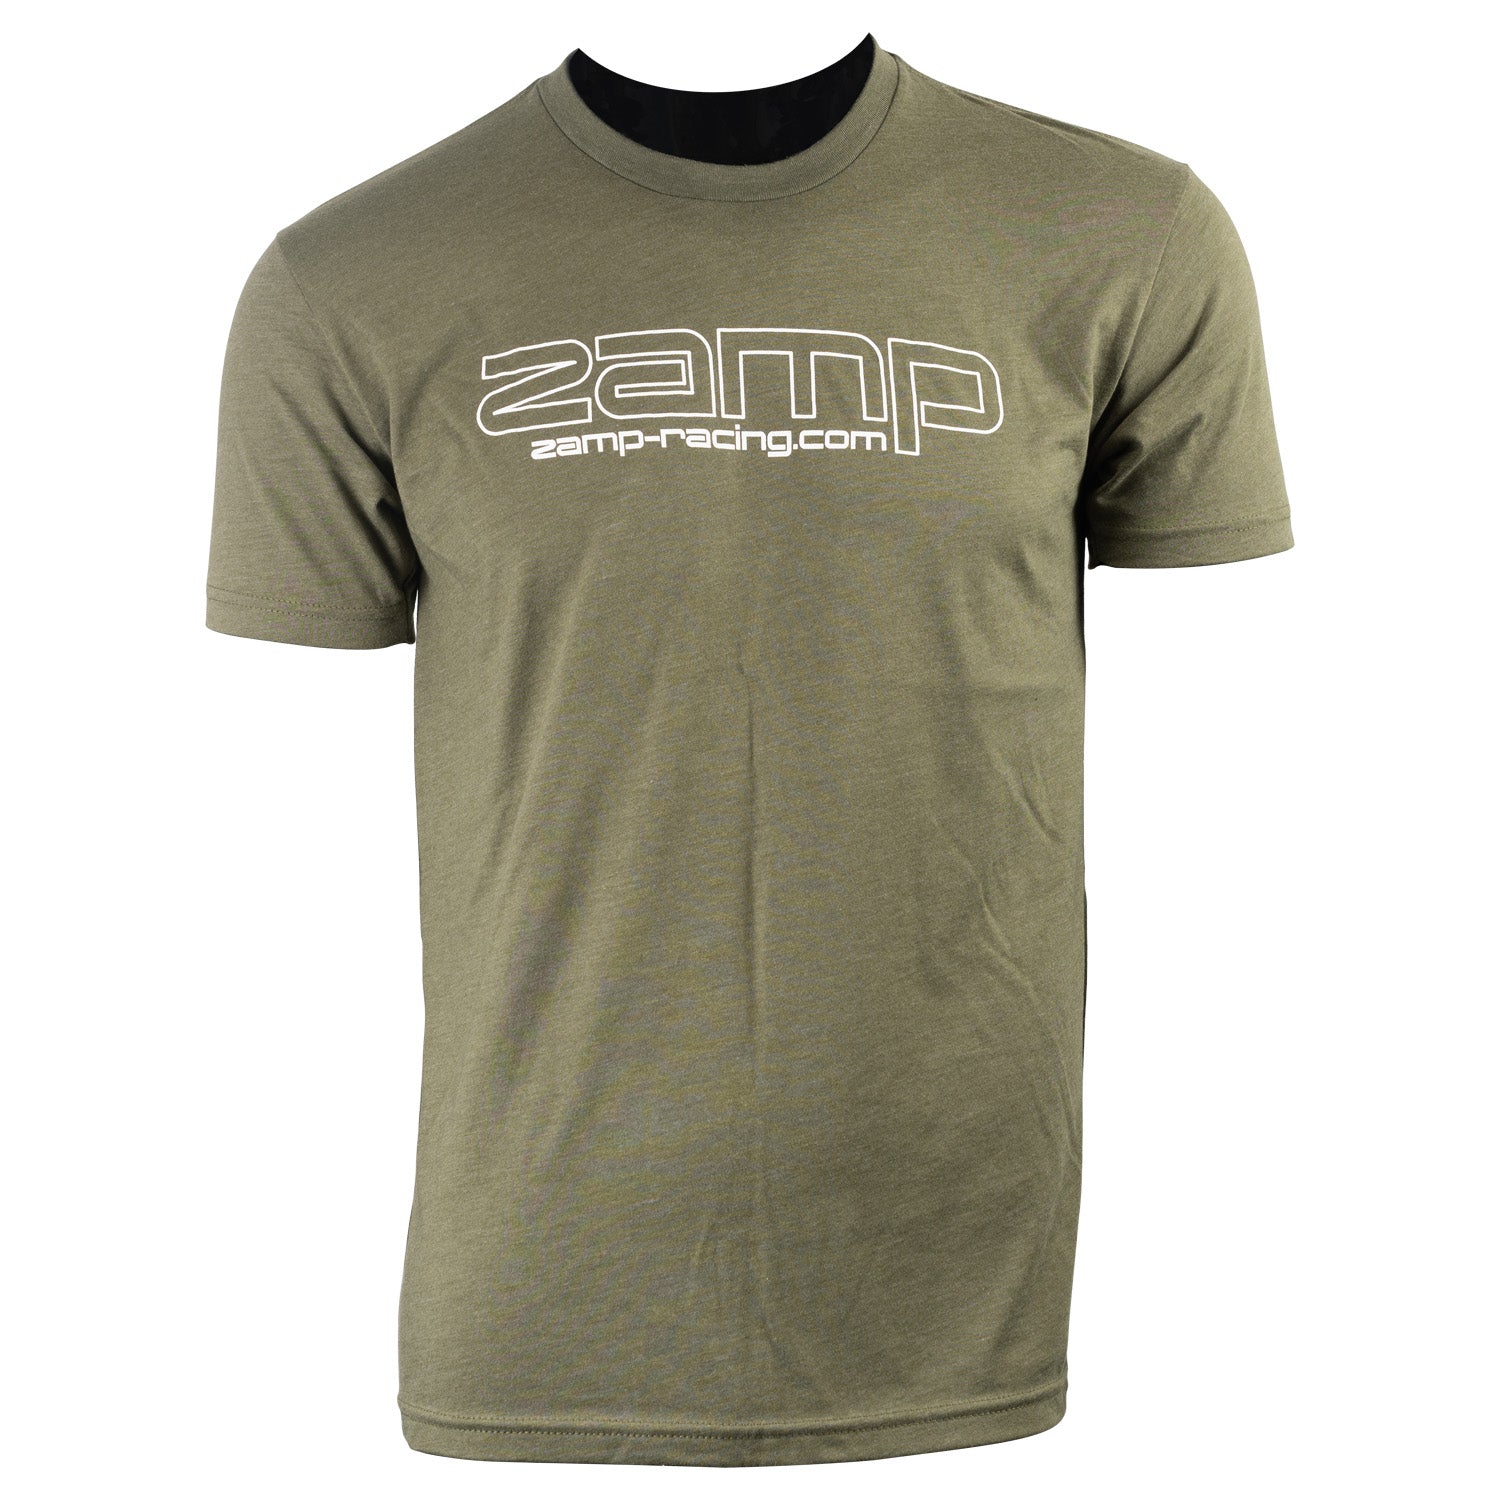 ZAMP Racing Est 2000 T-Shirt Green Small N003009S